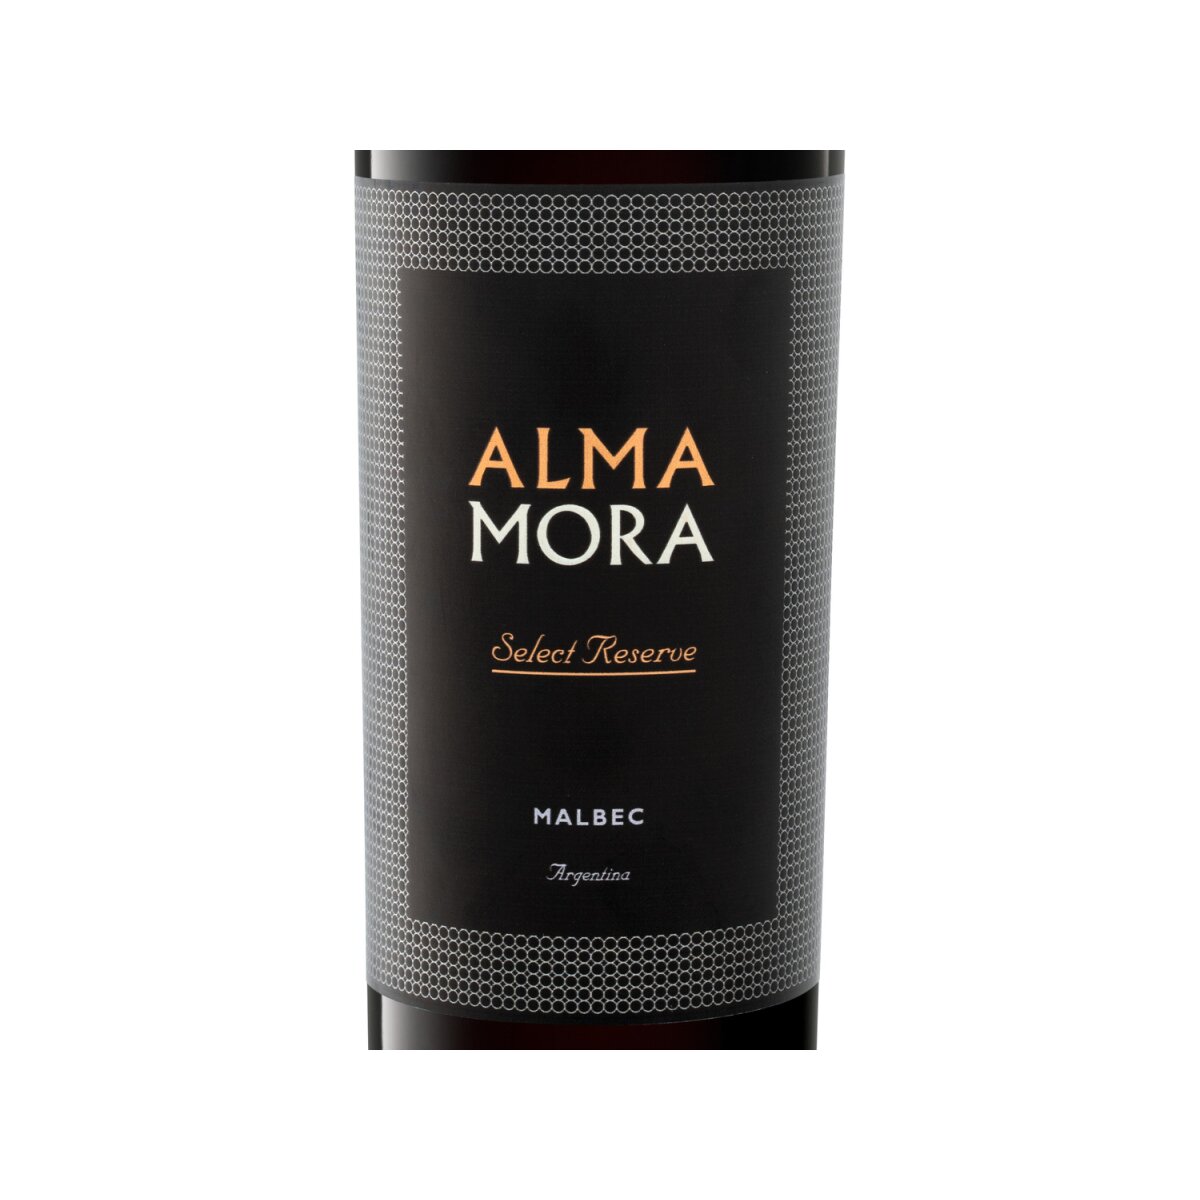 Alma Mora Select Reserve Malbec Argentinien trocken, Rotwein 2021, 4,99 €